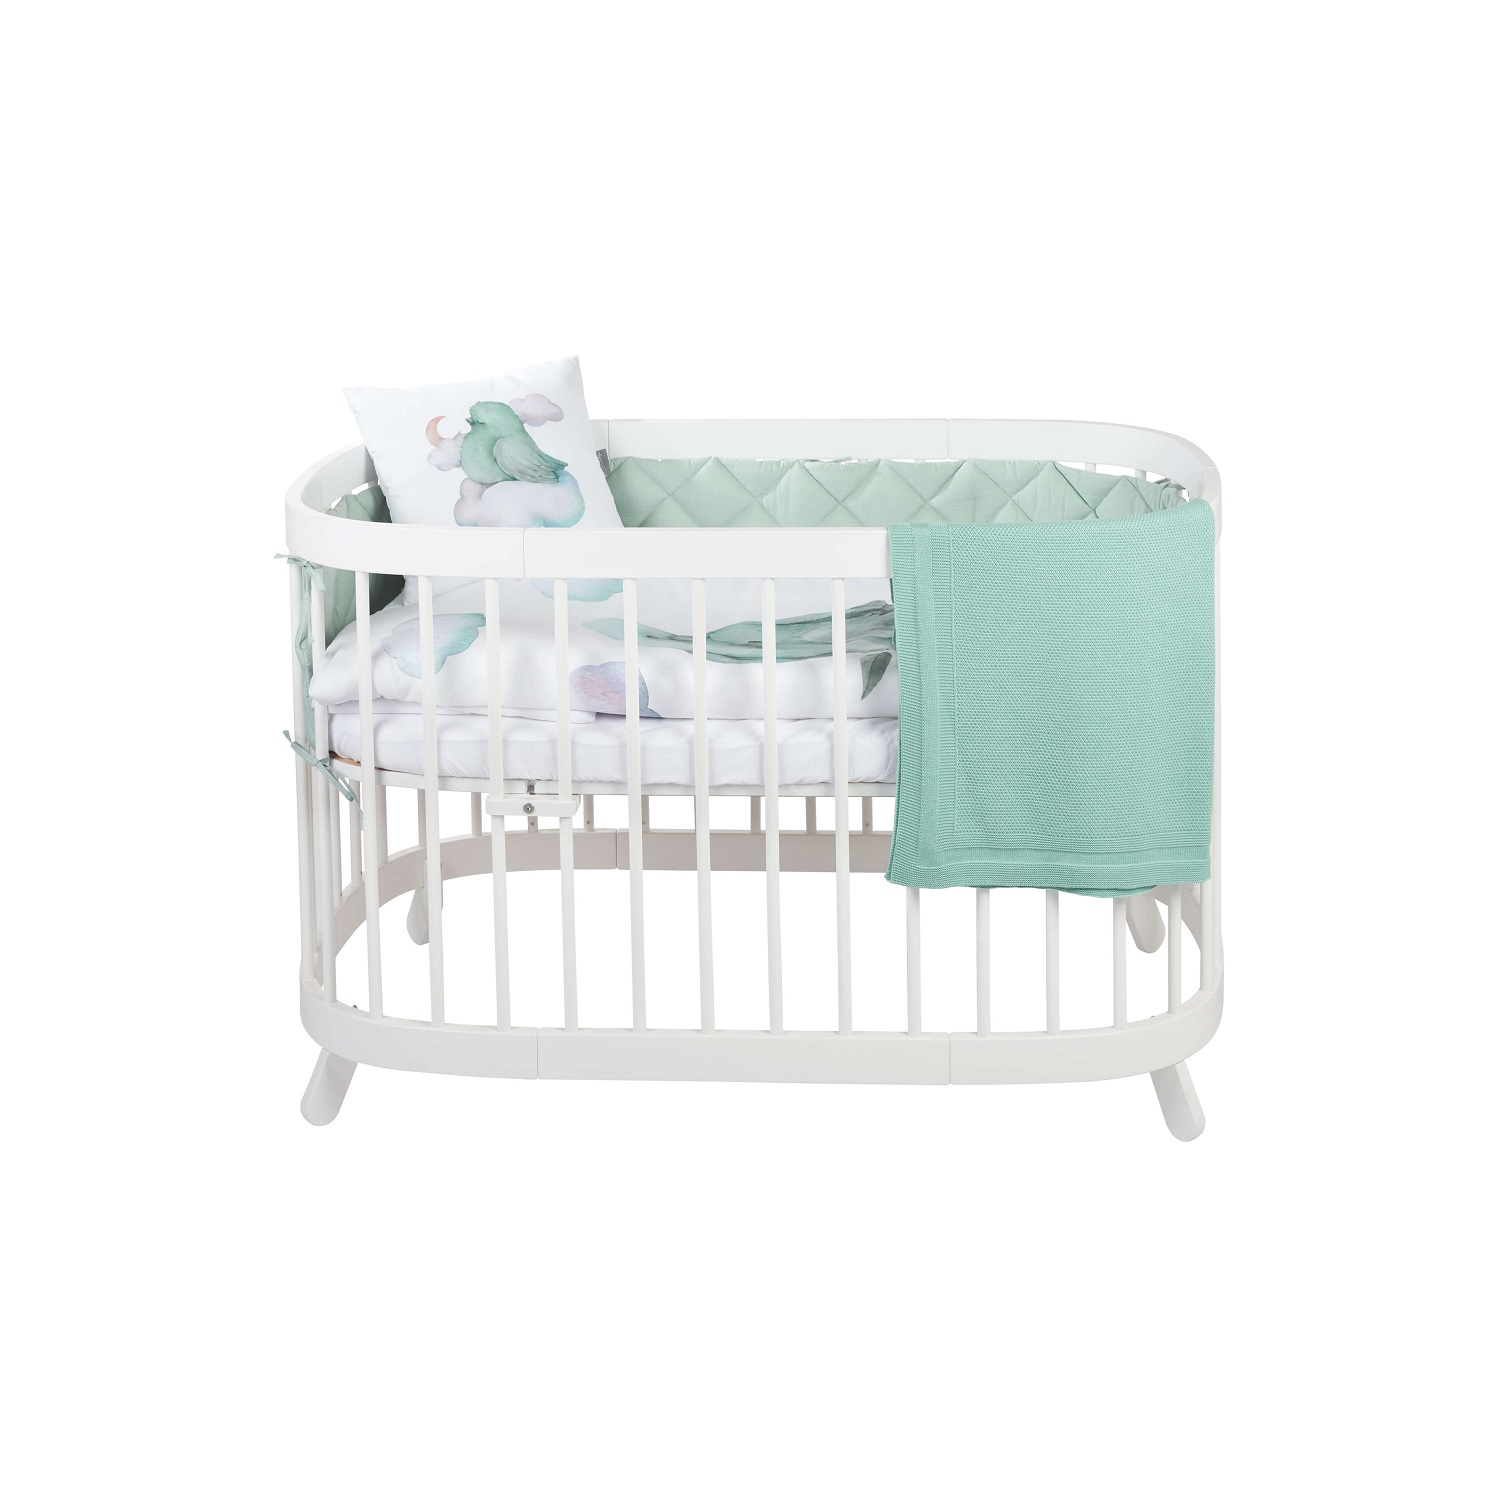 tweeto baby crib nest - RIO - mint